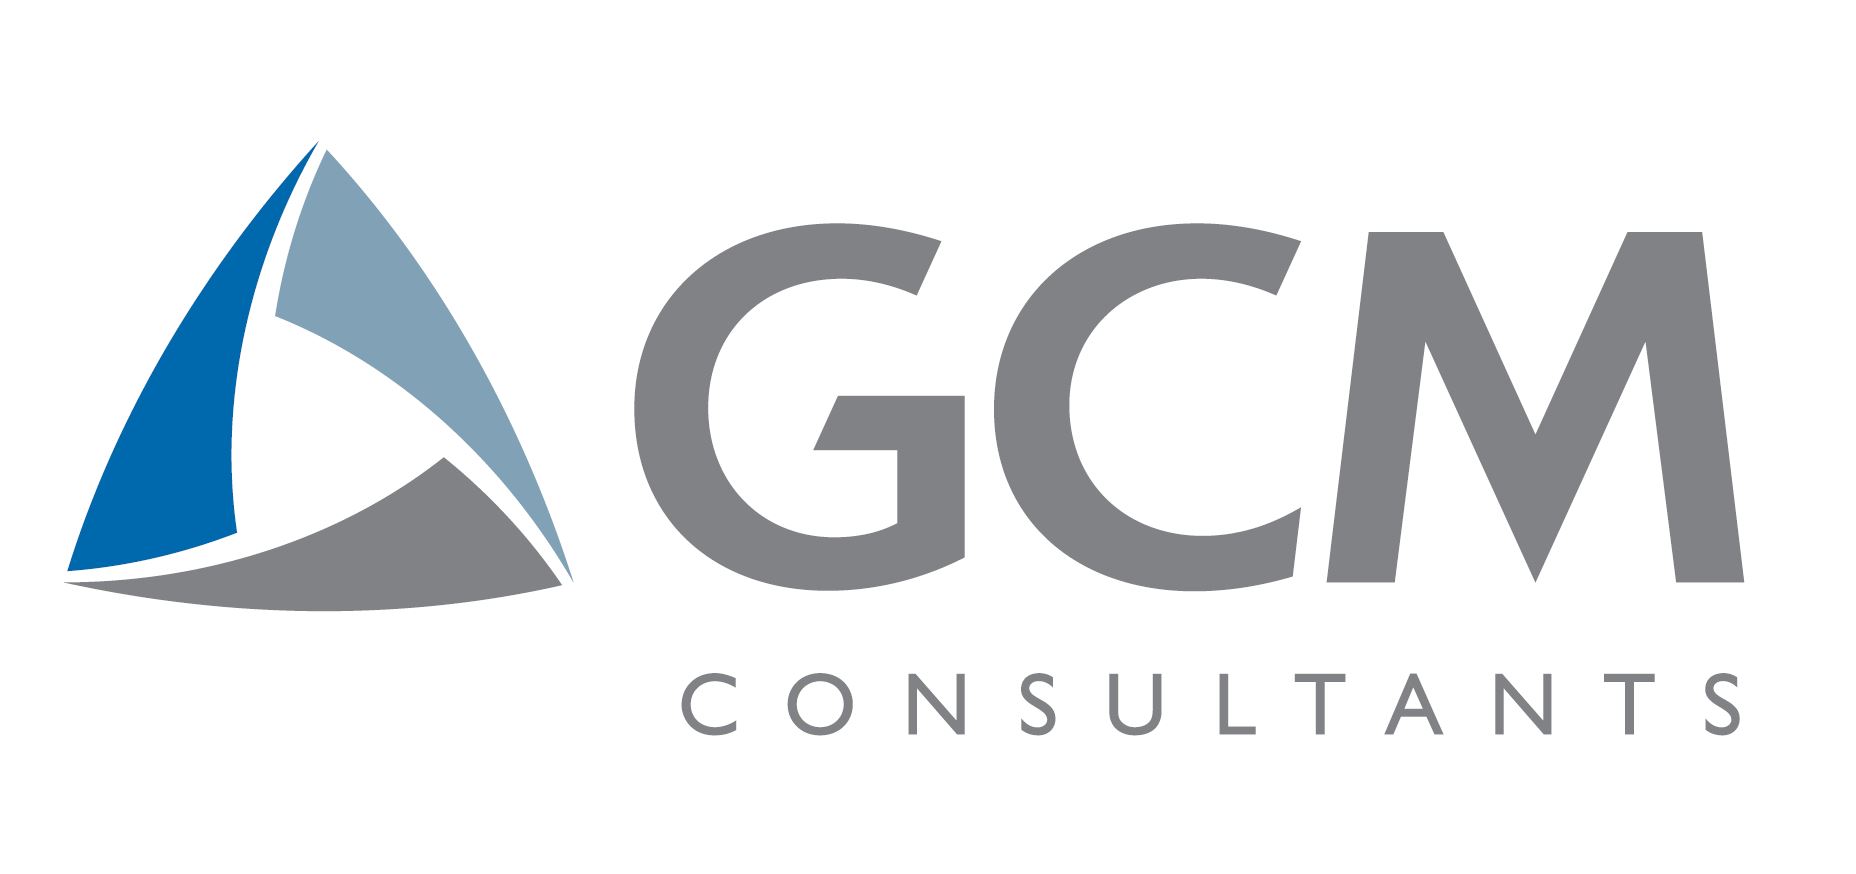 Logo GCM Consultants